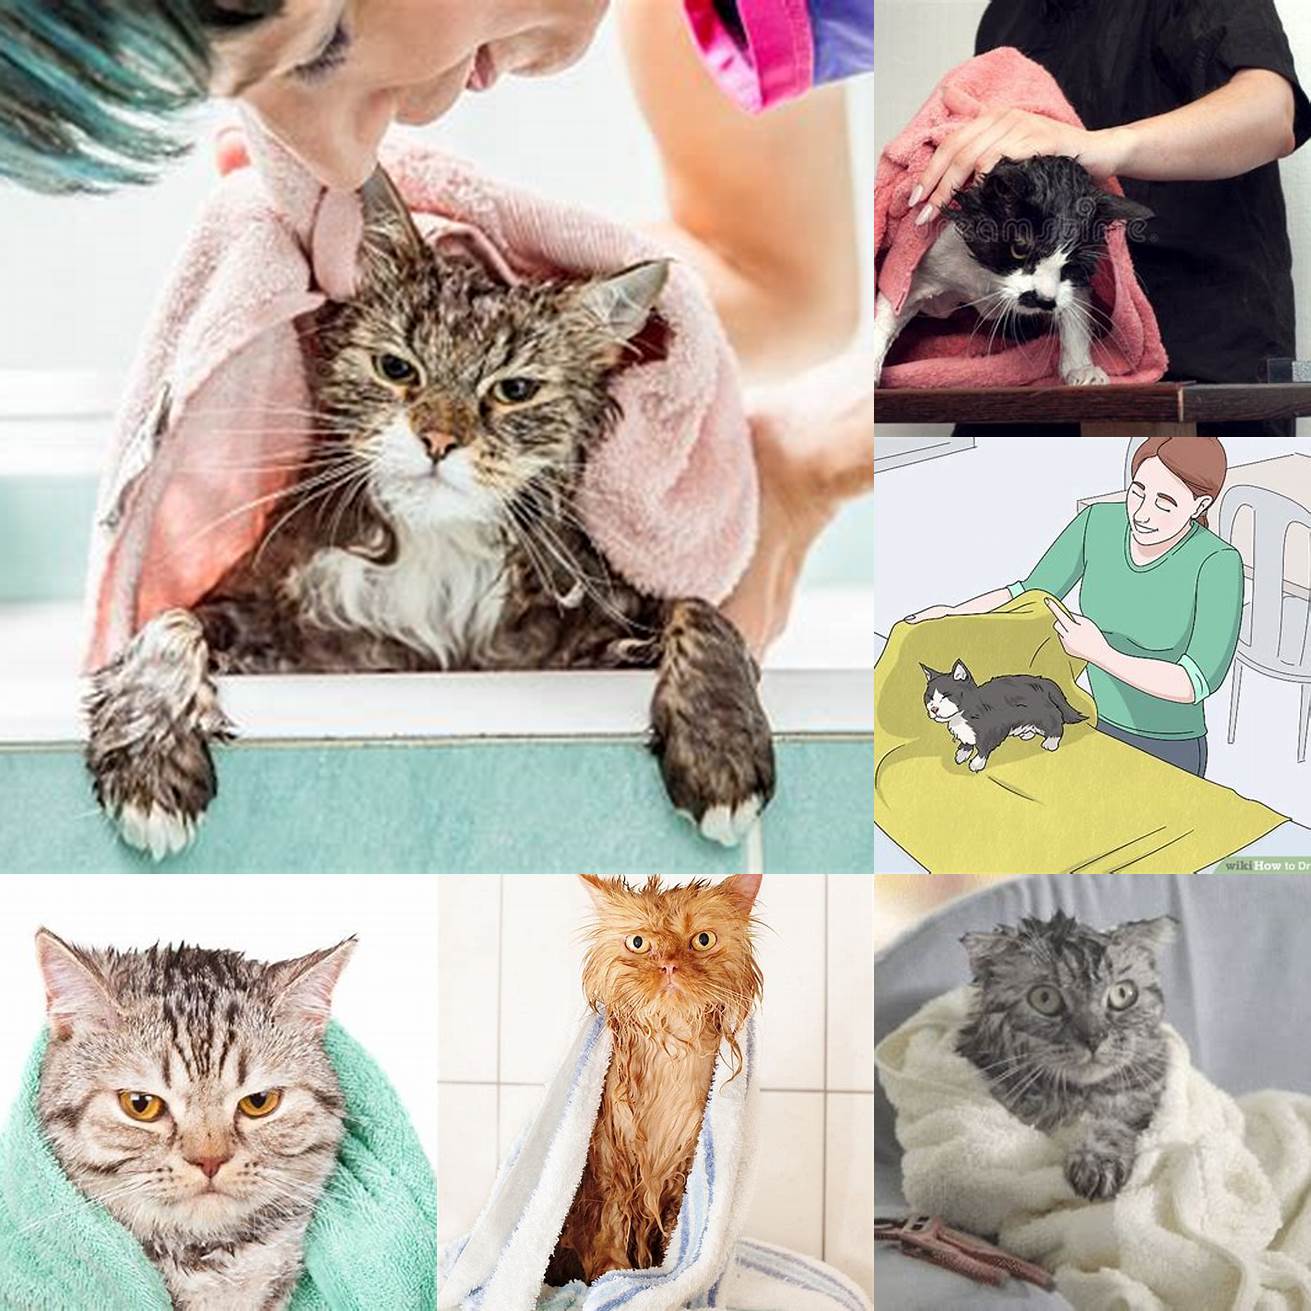 Towel-drying a cat